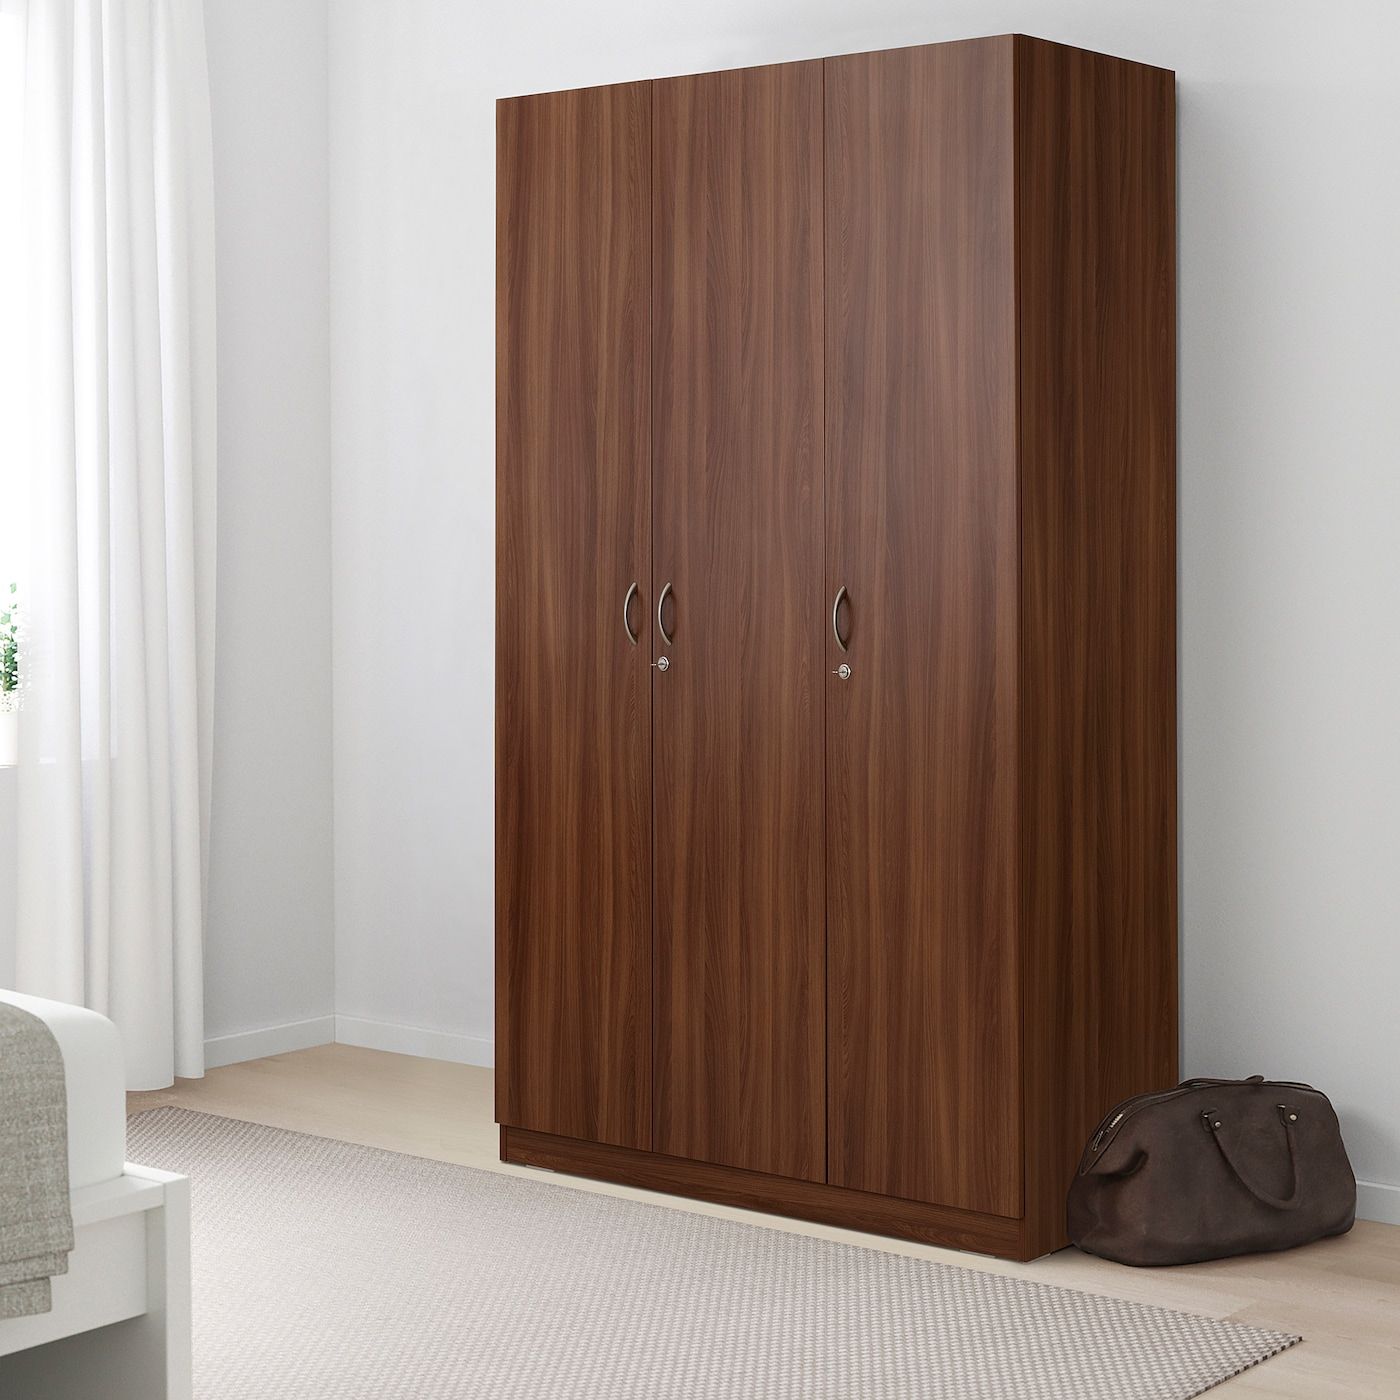 Nodeland Wardrobe With 3 Doors, Medium Brown, 120x52x202 Cm  (471/4x203/8x791/2") – Ikea Pertaining To Cheap 3 Door Wardrobes (View 6 of 15)